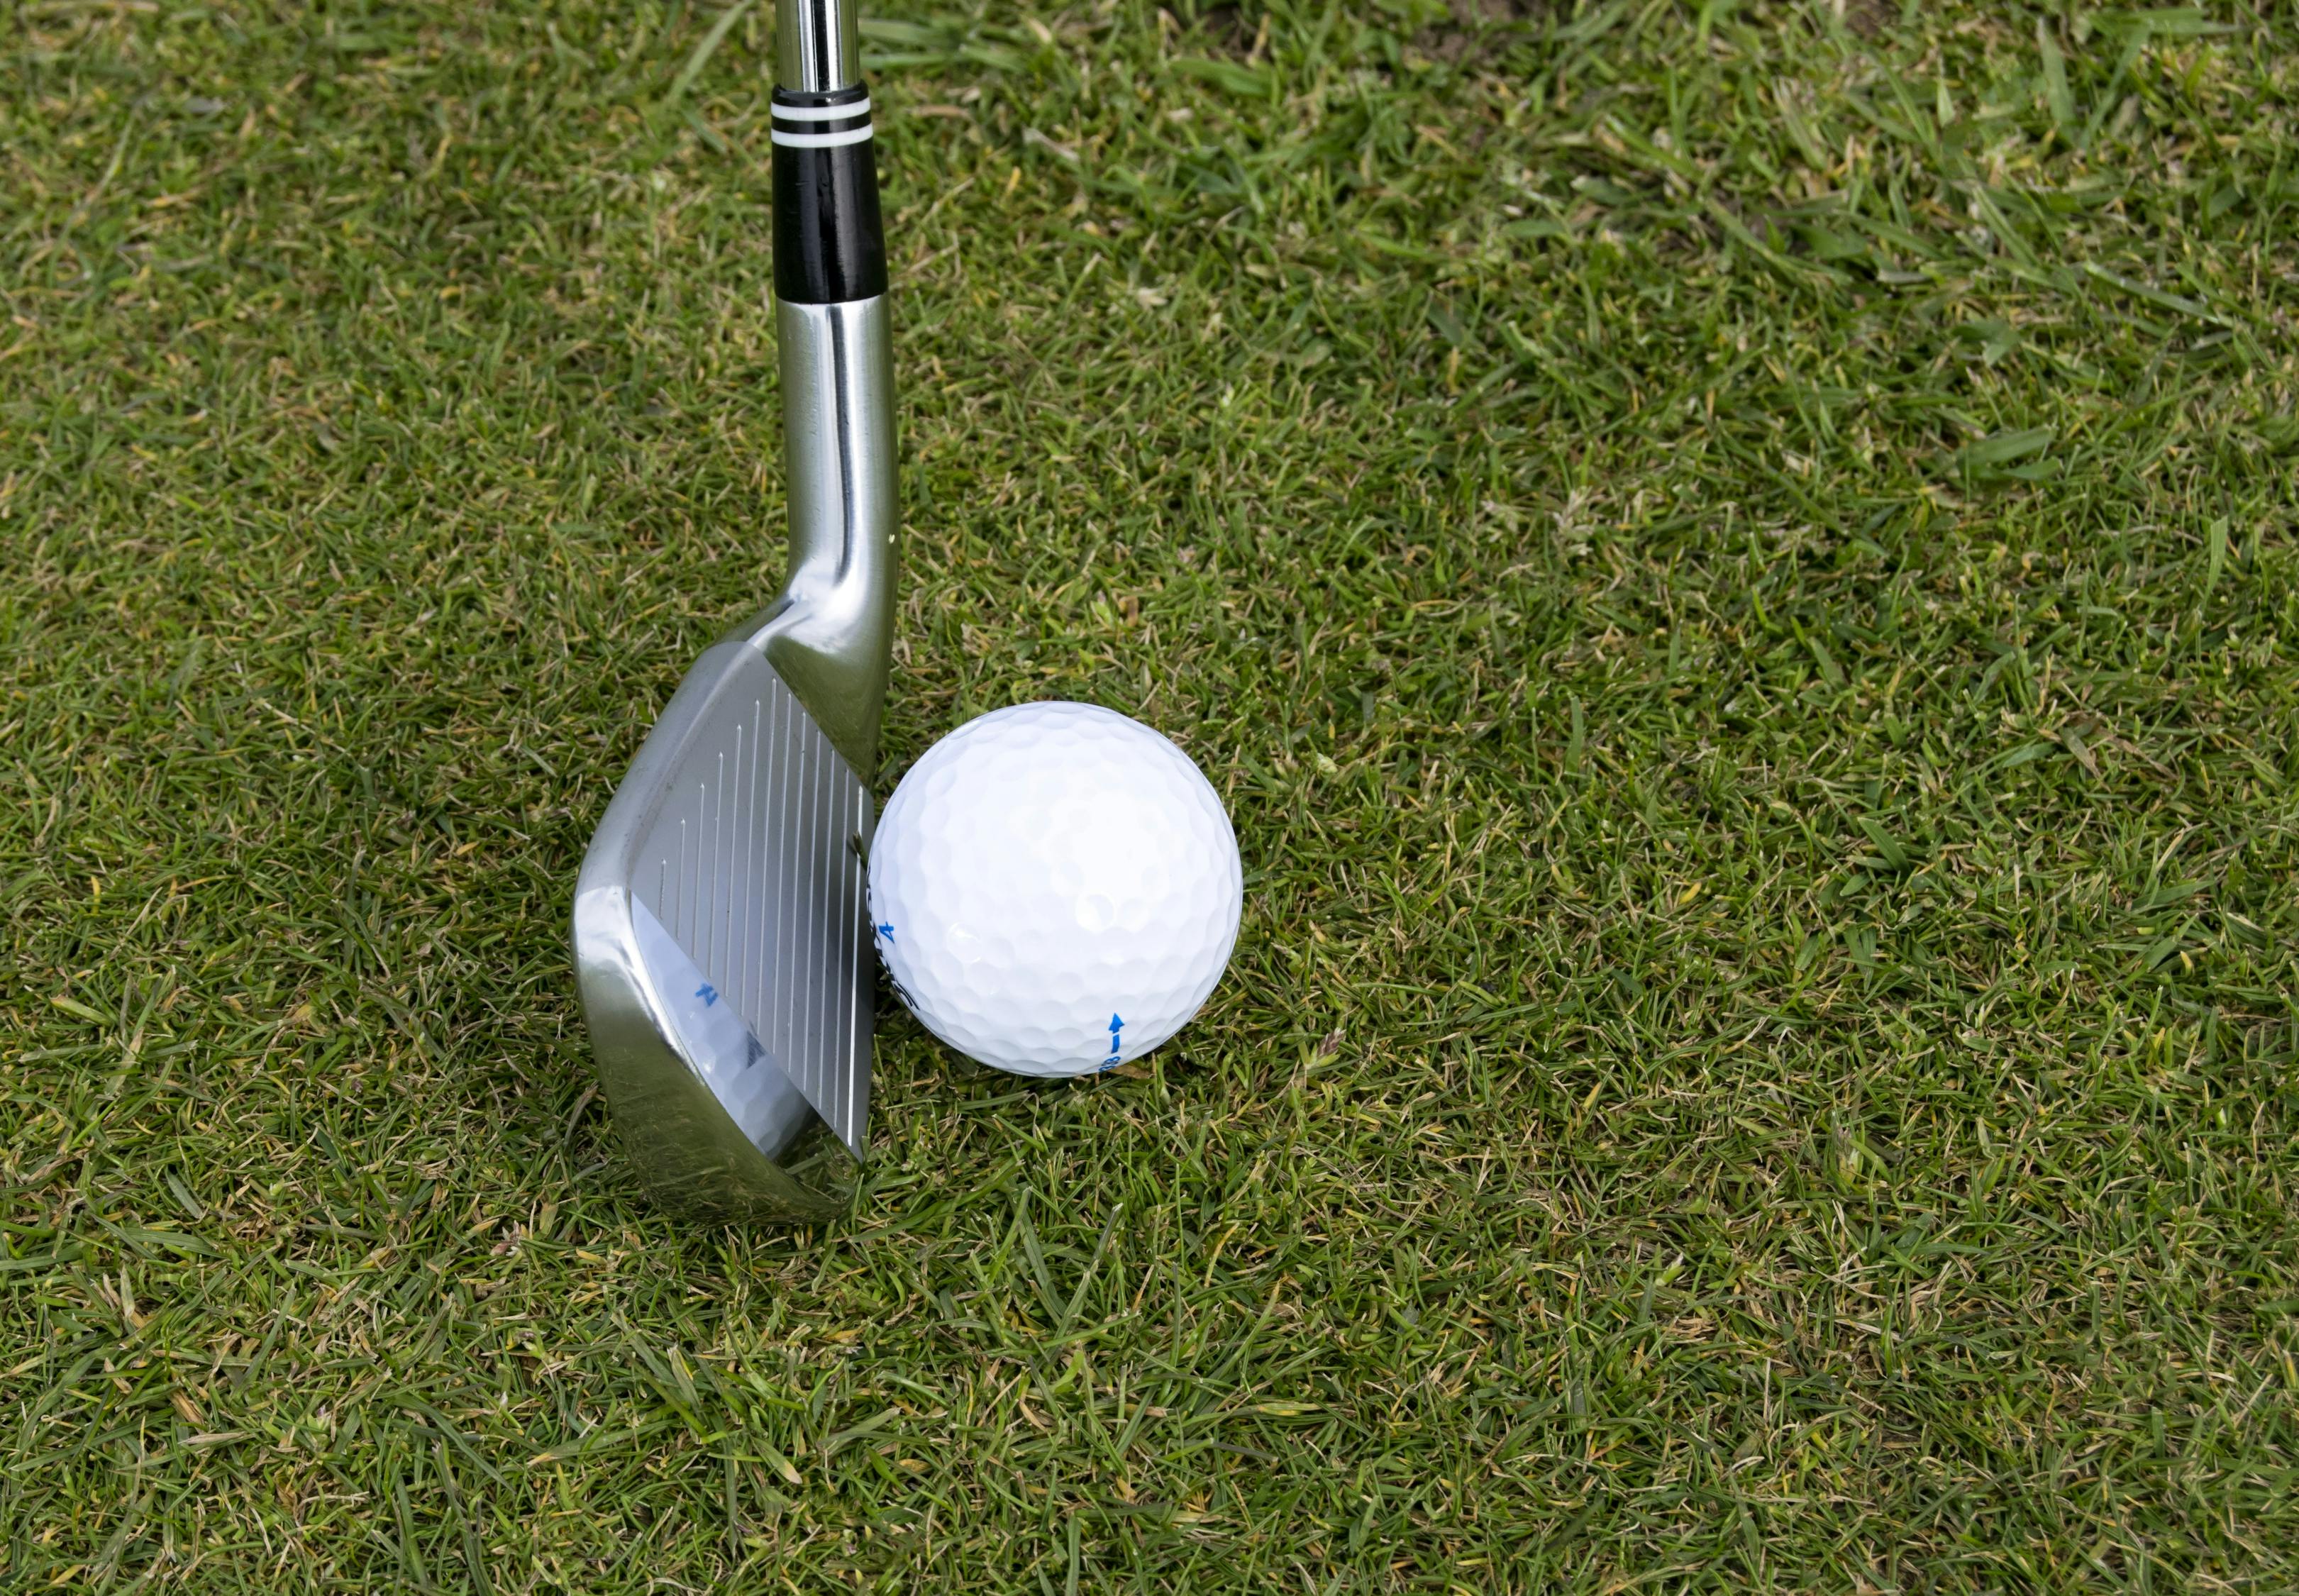 Silver Wedge Golf Club Beside Ball · Free Stock Photo